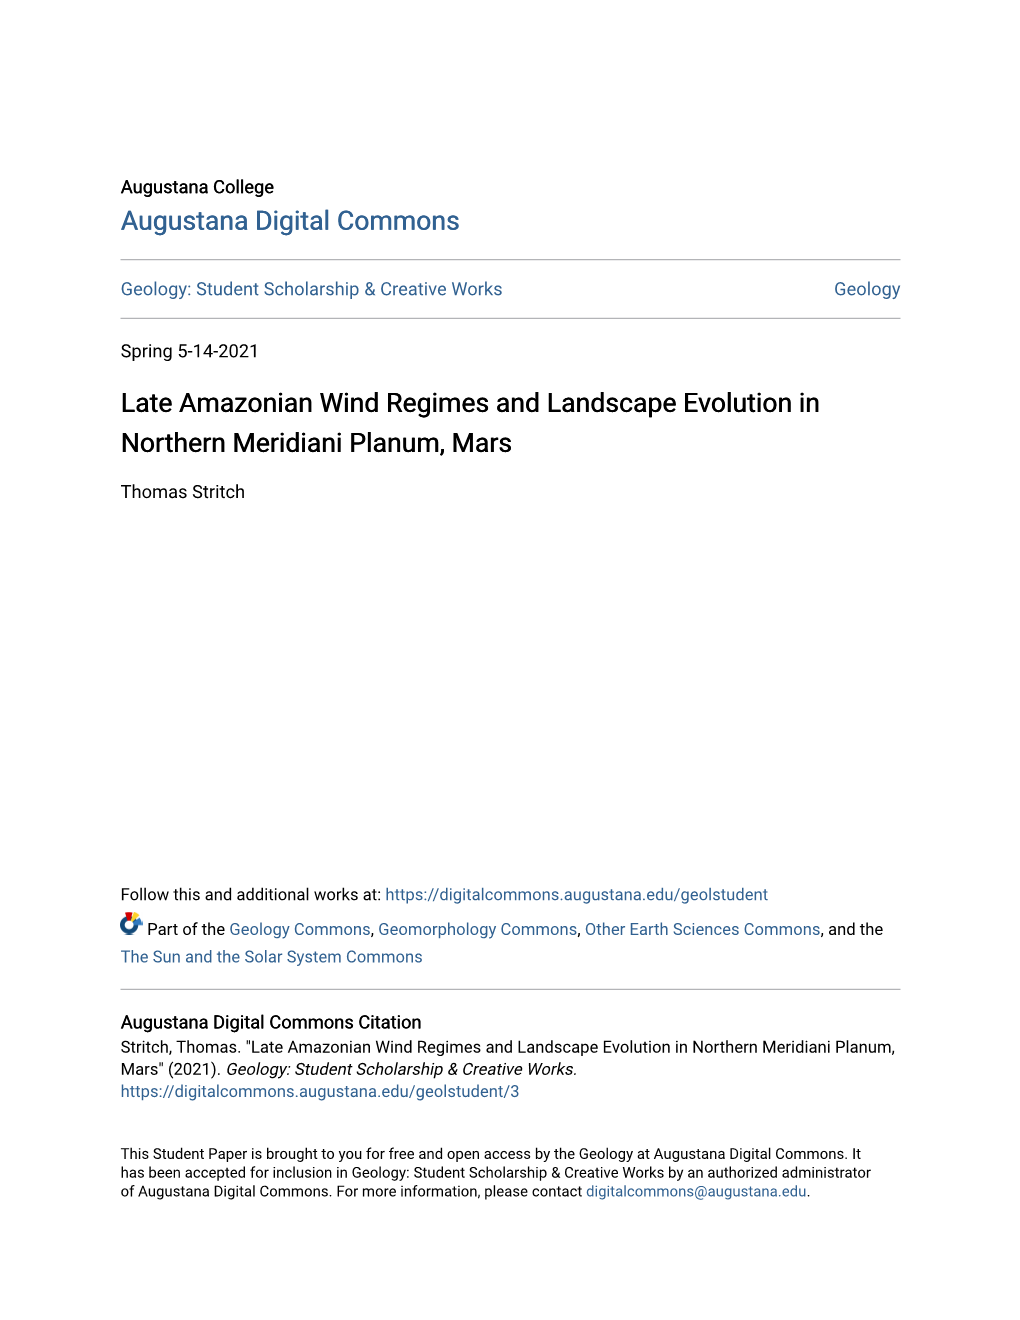 Late Amazonian Wind Regimes and Landscape Evolution in Northern Meridiani Planum, Mars